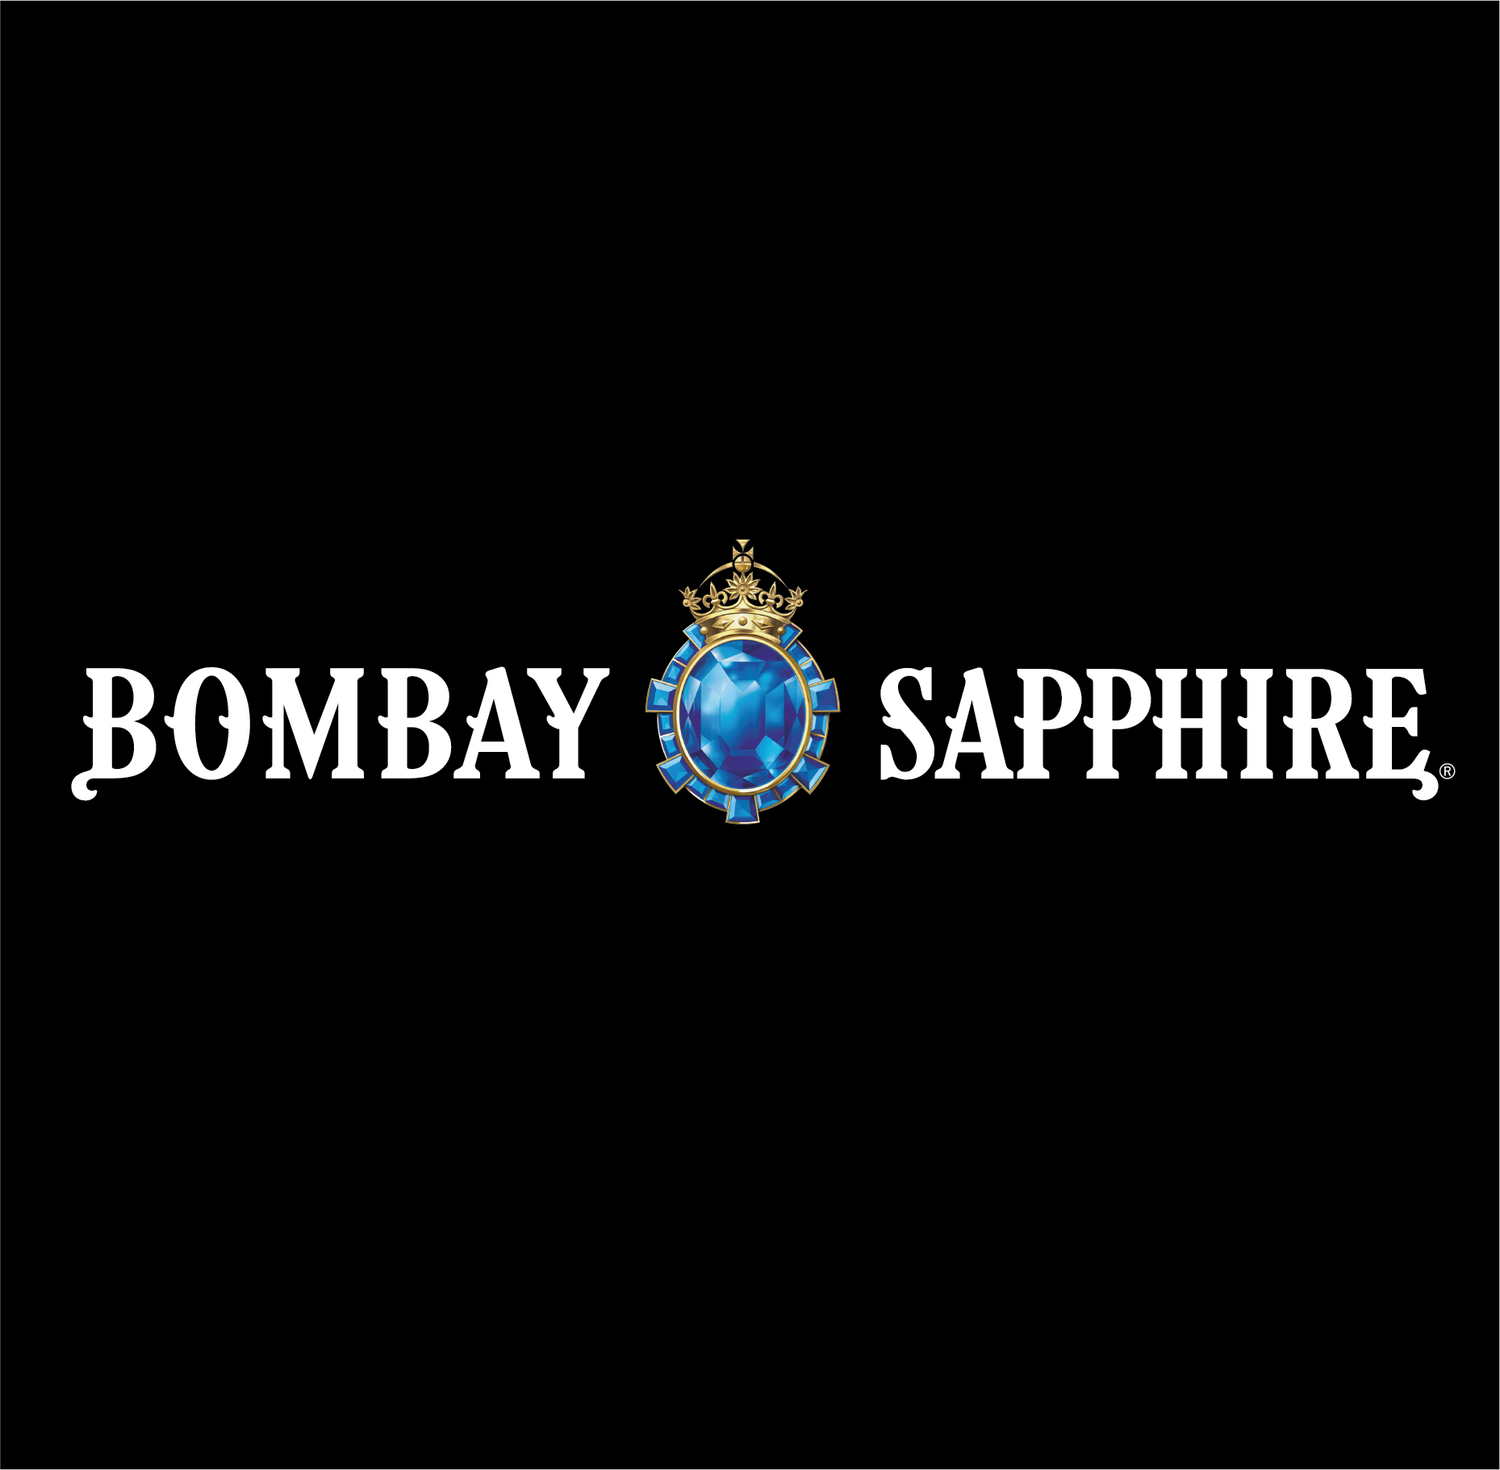 Bombay Sapphire Logos